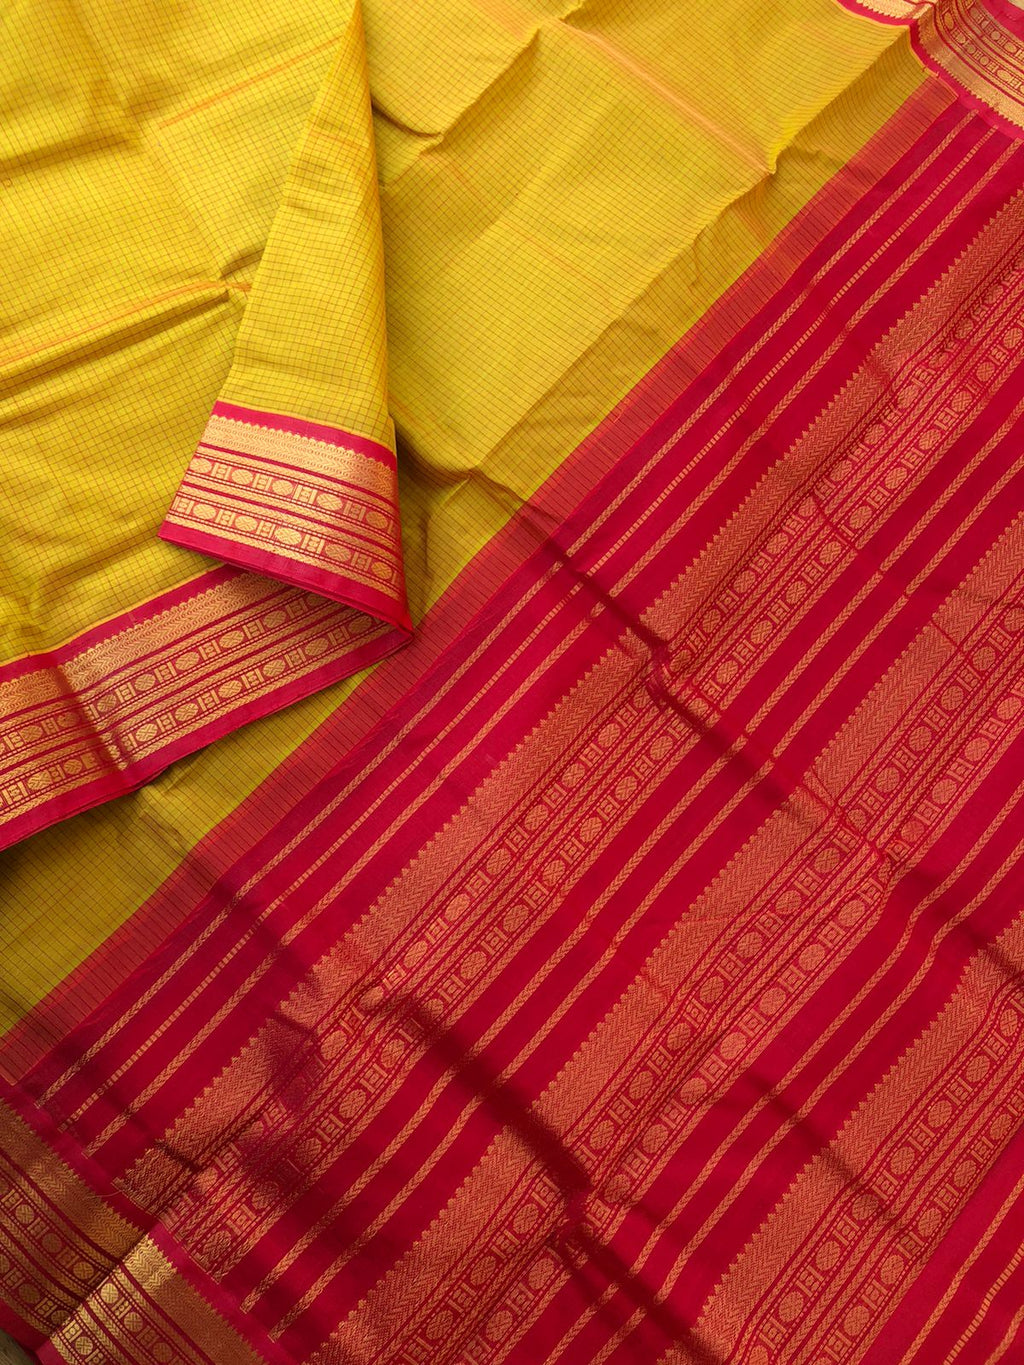 Korvai Silk Cottons - mustard and red podi kattam